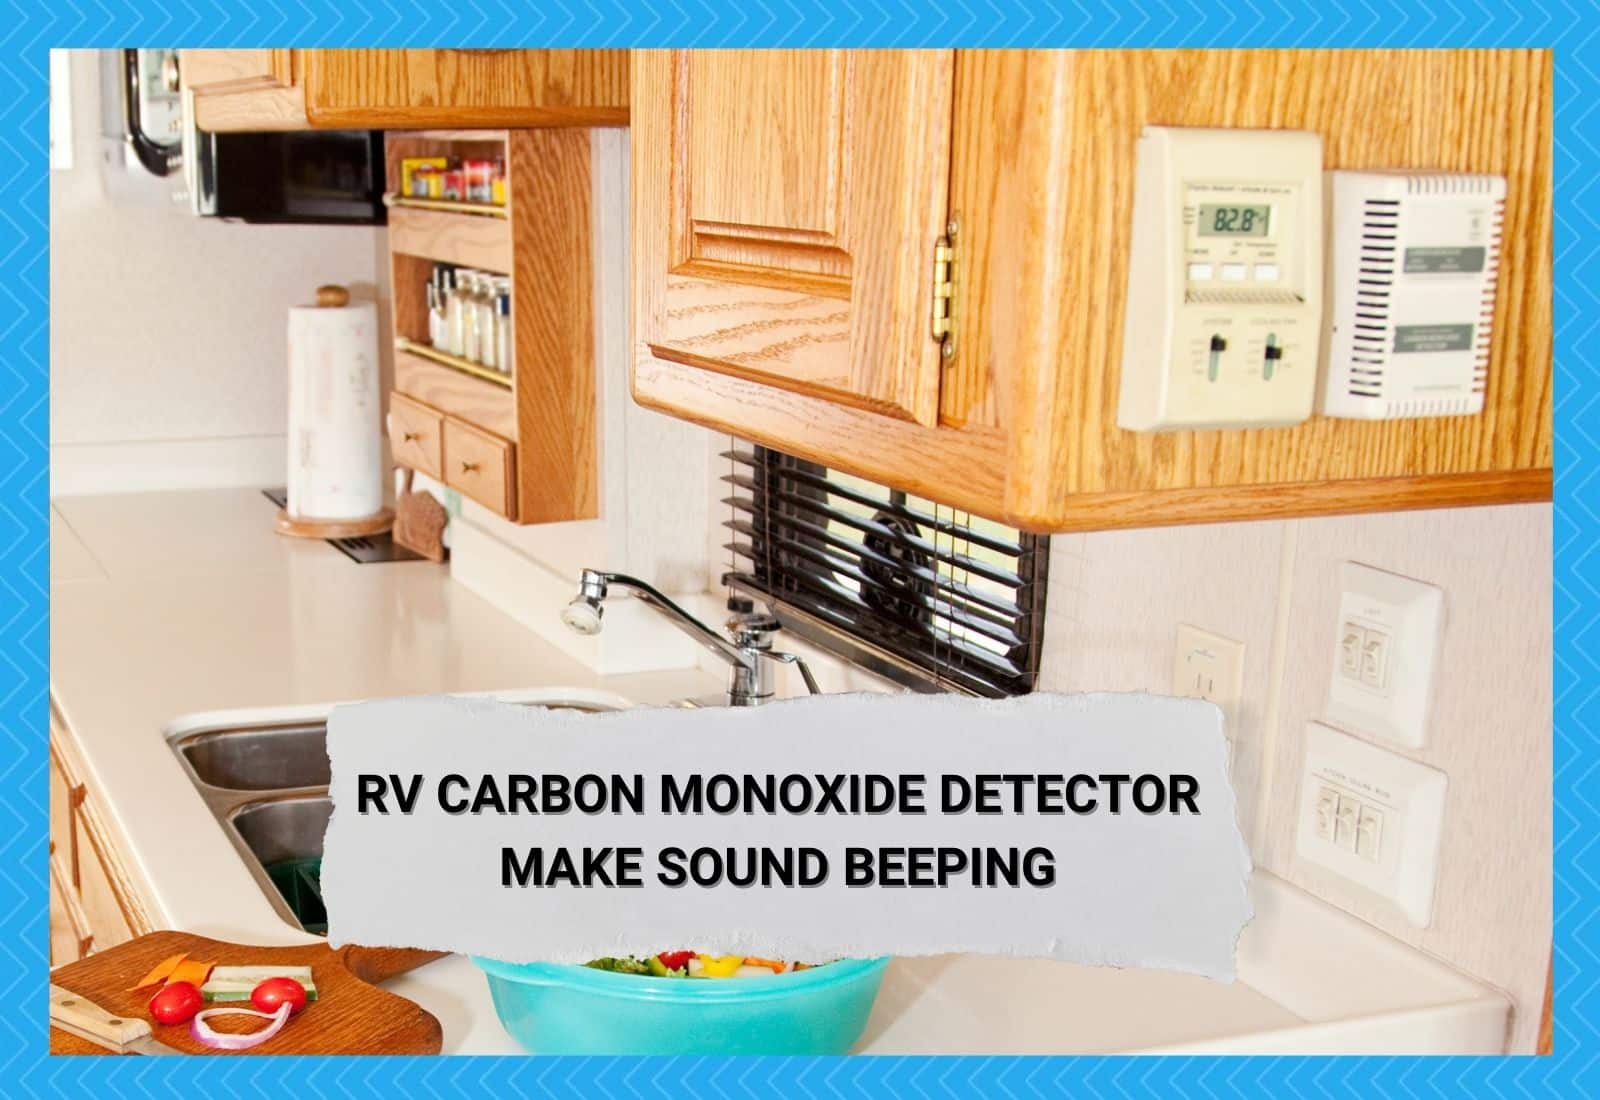 RV Carbon Monoxide Detector Make Sound